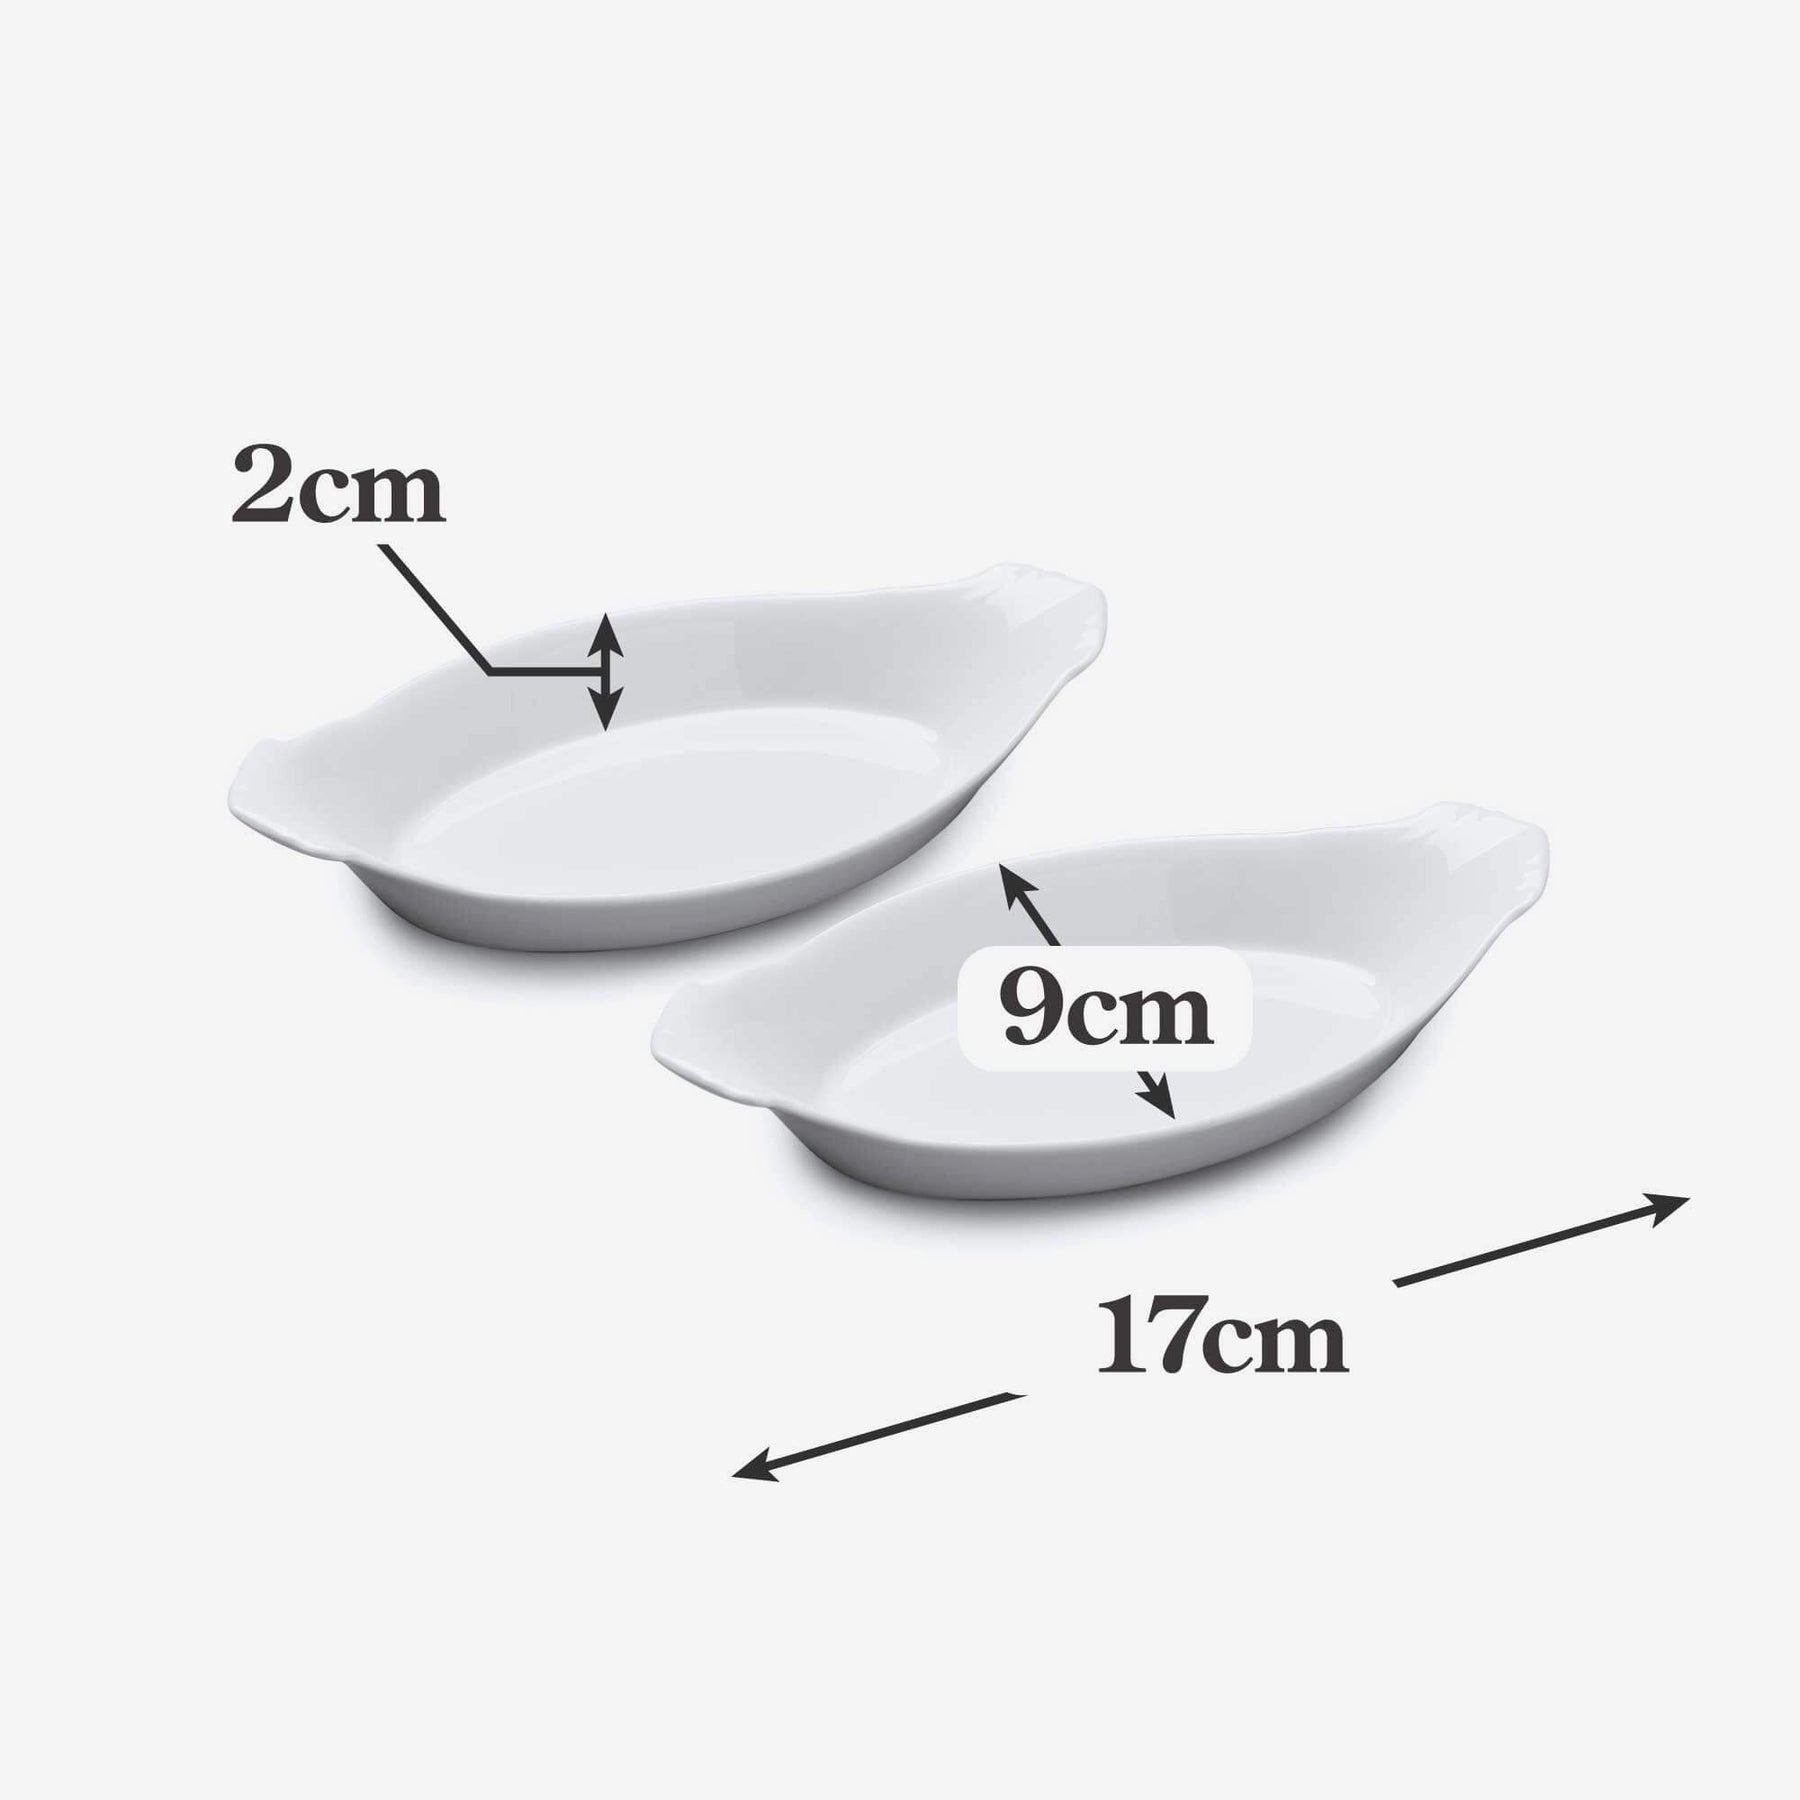 Porcelain Traditional Oval Gratin Dish, Set of 2